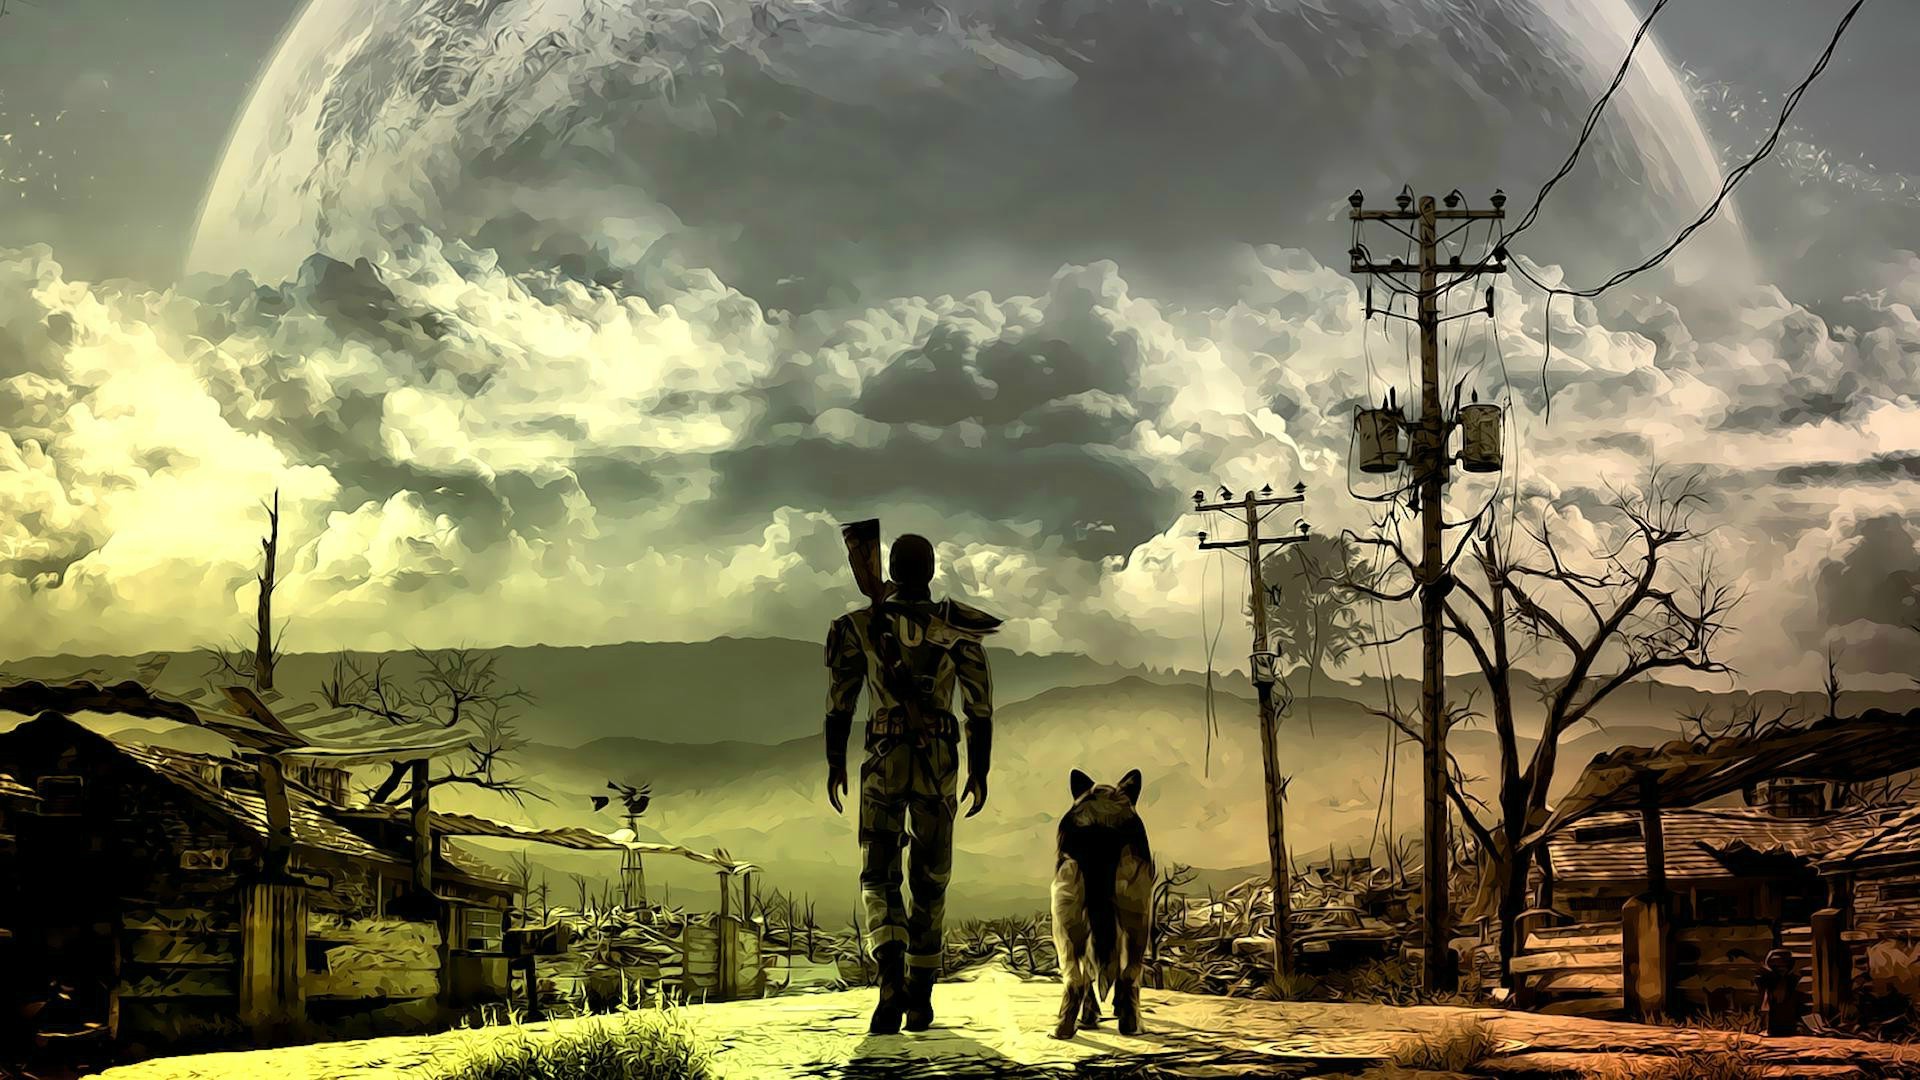 Fallout, Moonlight, Dog, Street, Fallout 3, Apocalyptic, Video Games, Colorful, Artwork, Digital Art, Fan Art Wallpaper